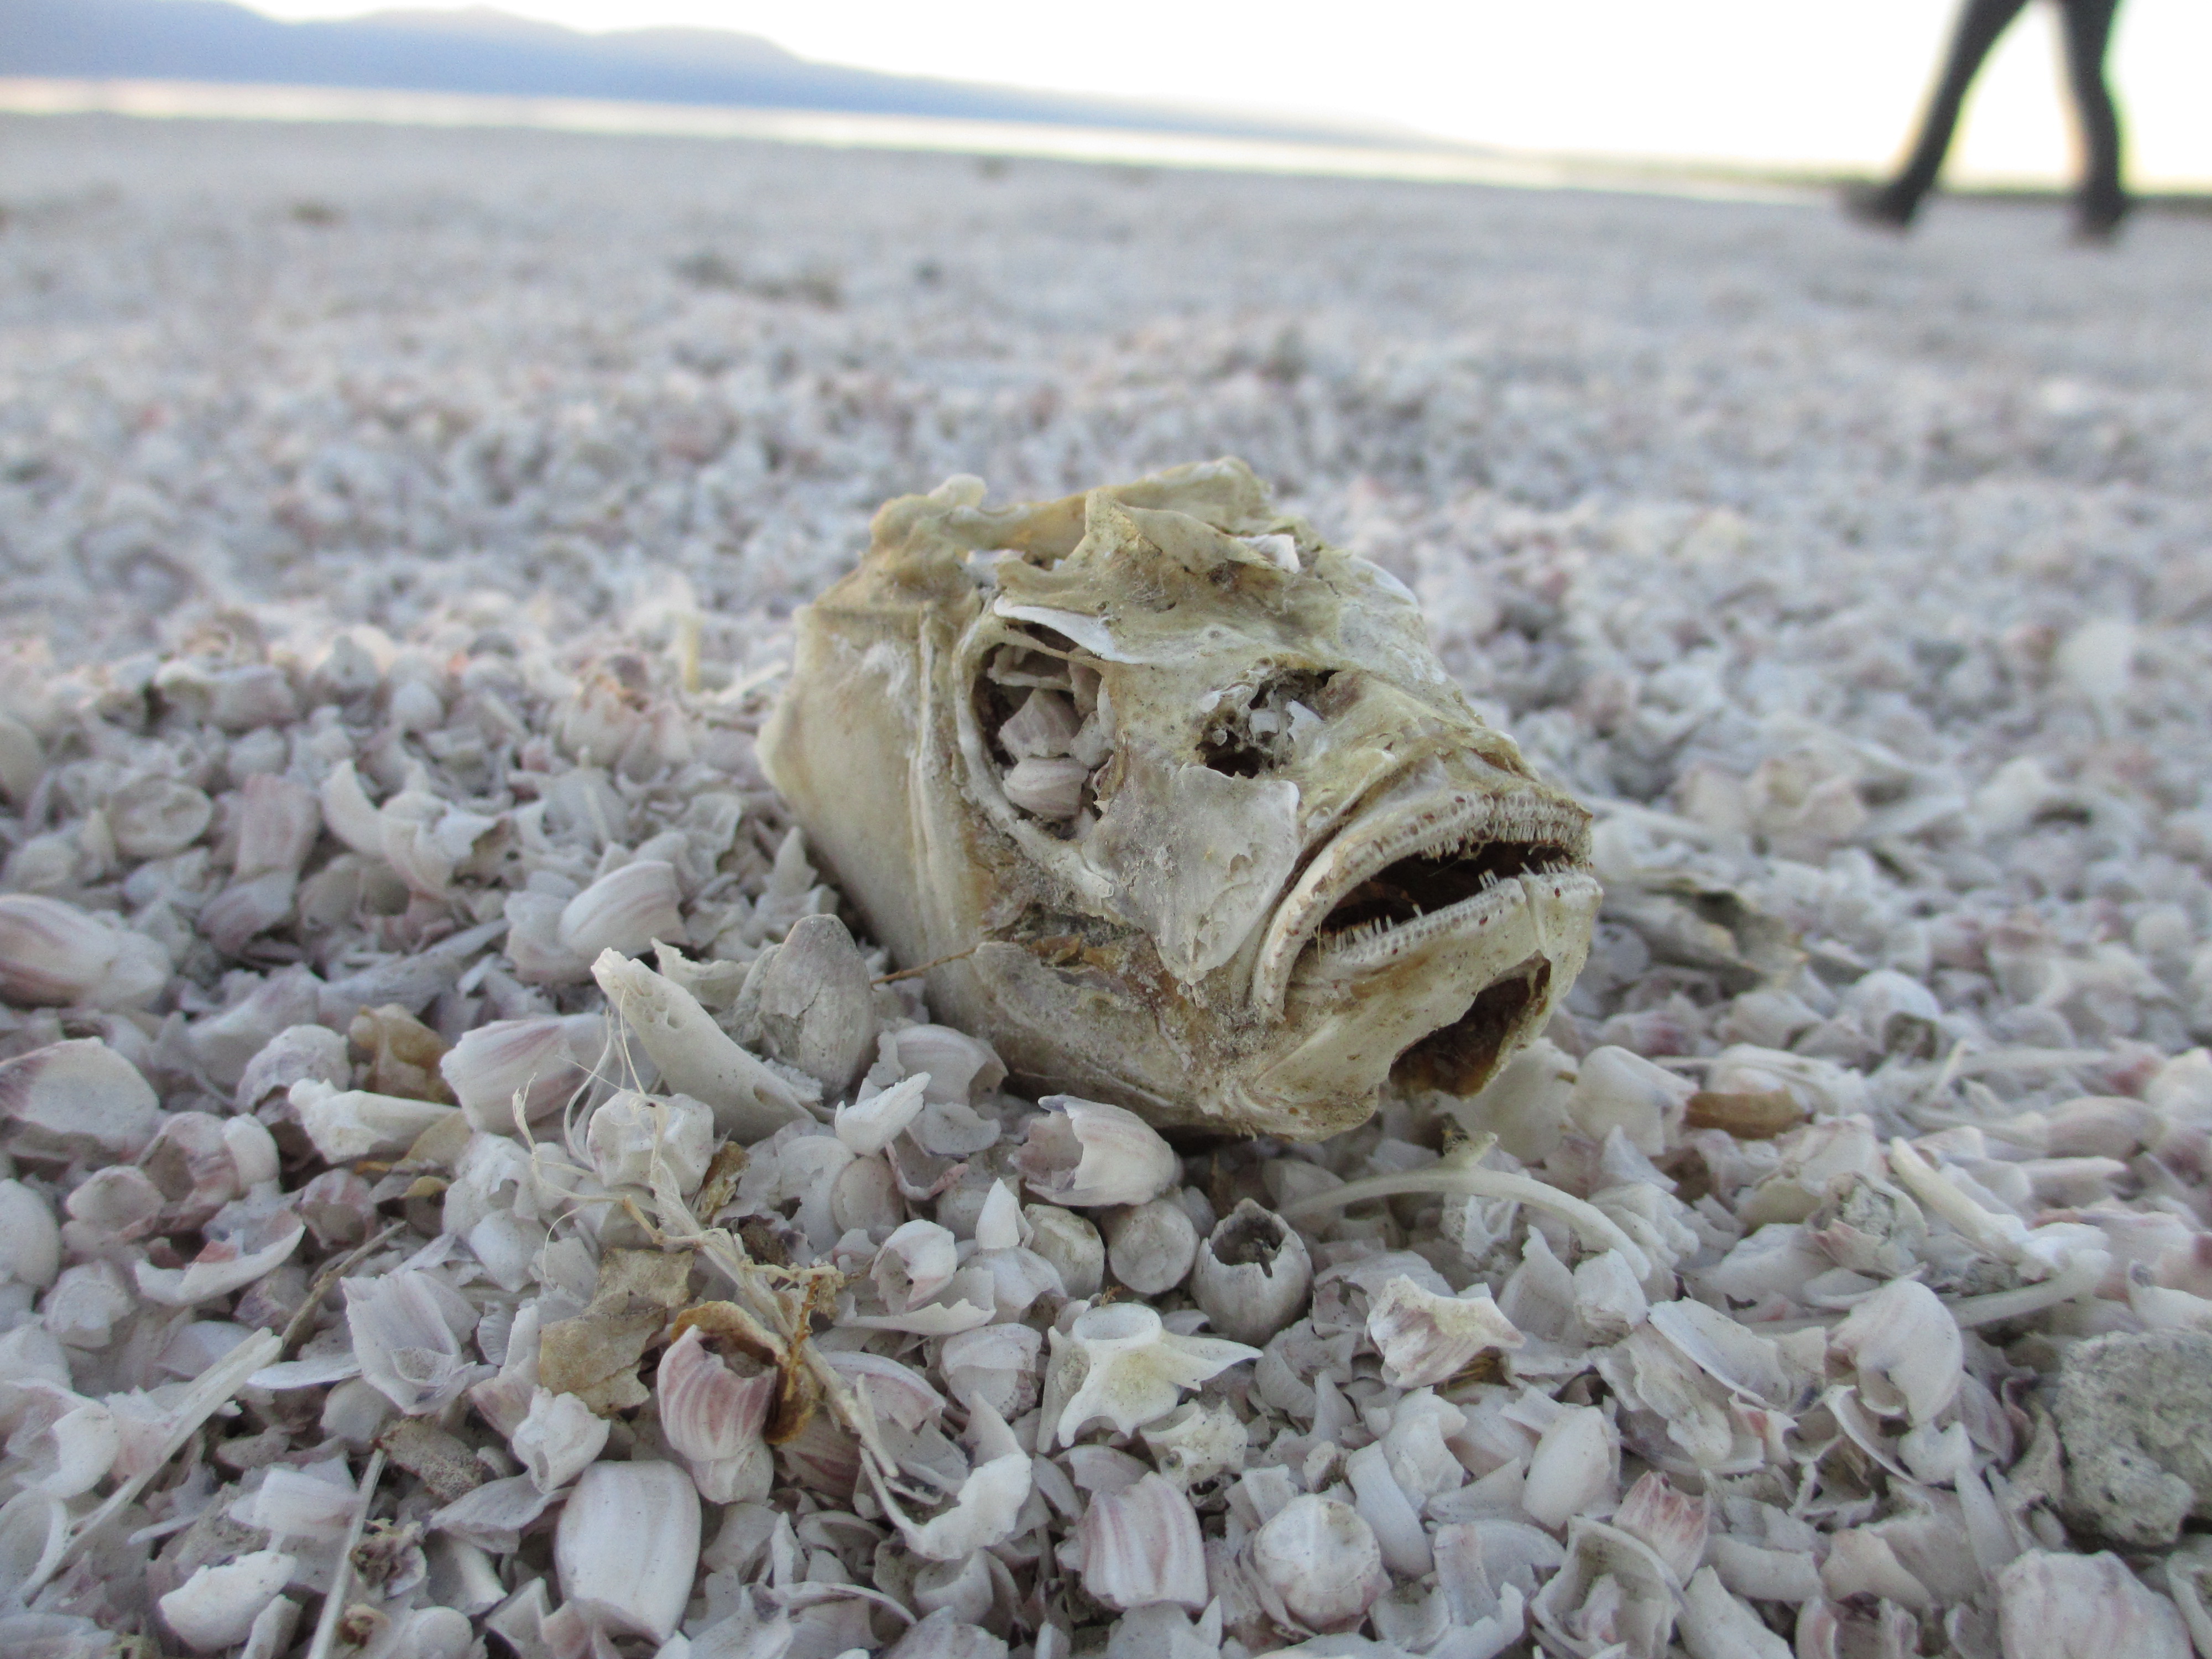 Tilapia head at the Salton Sea.